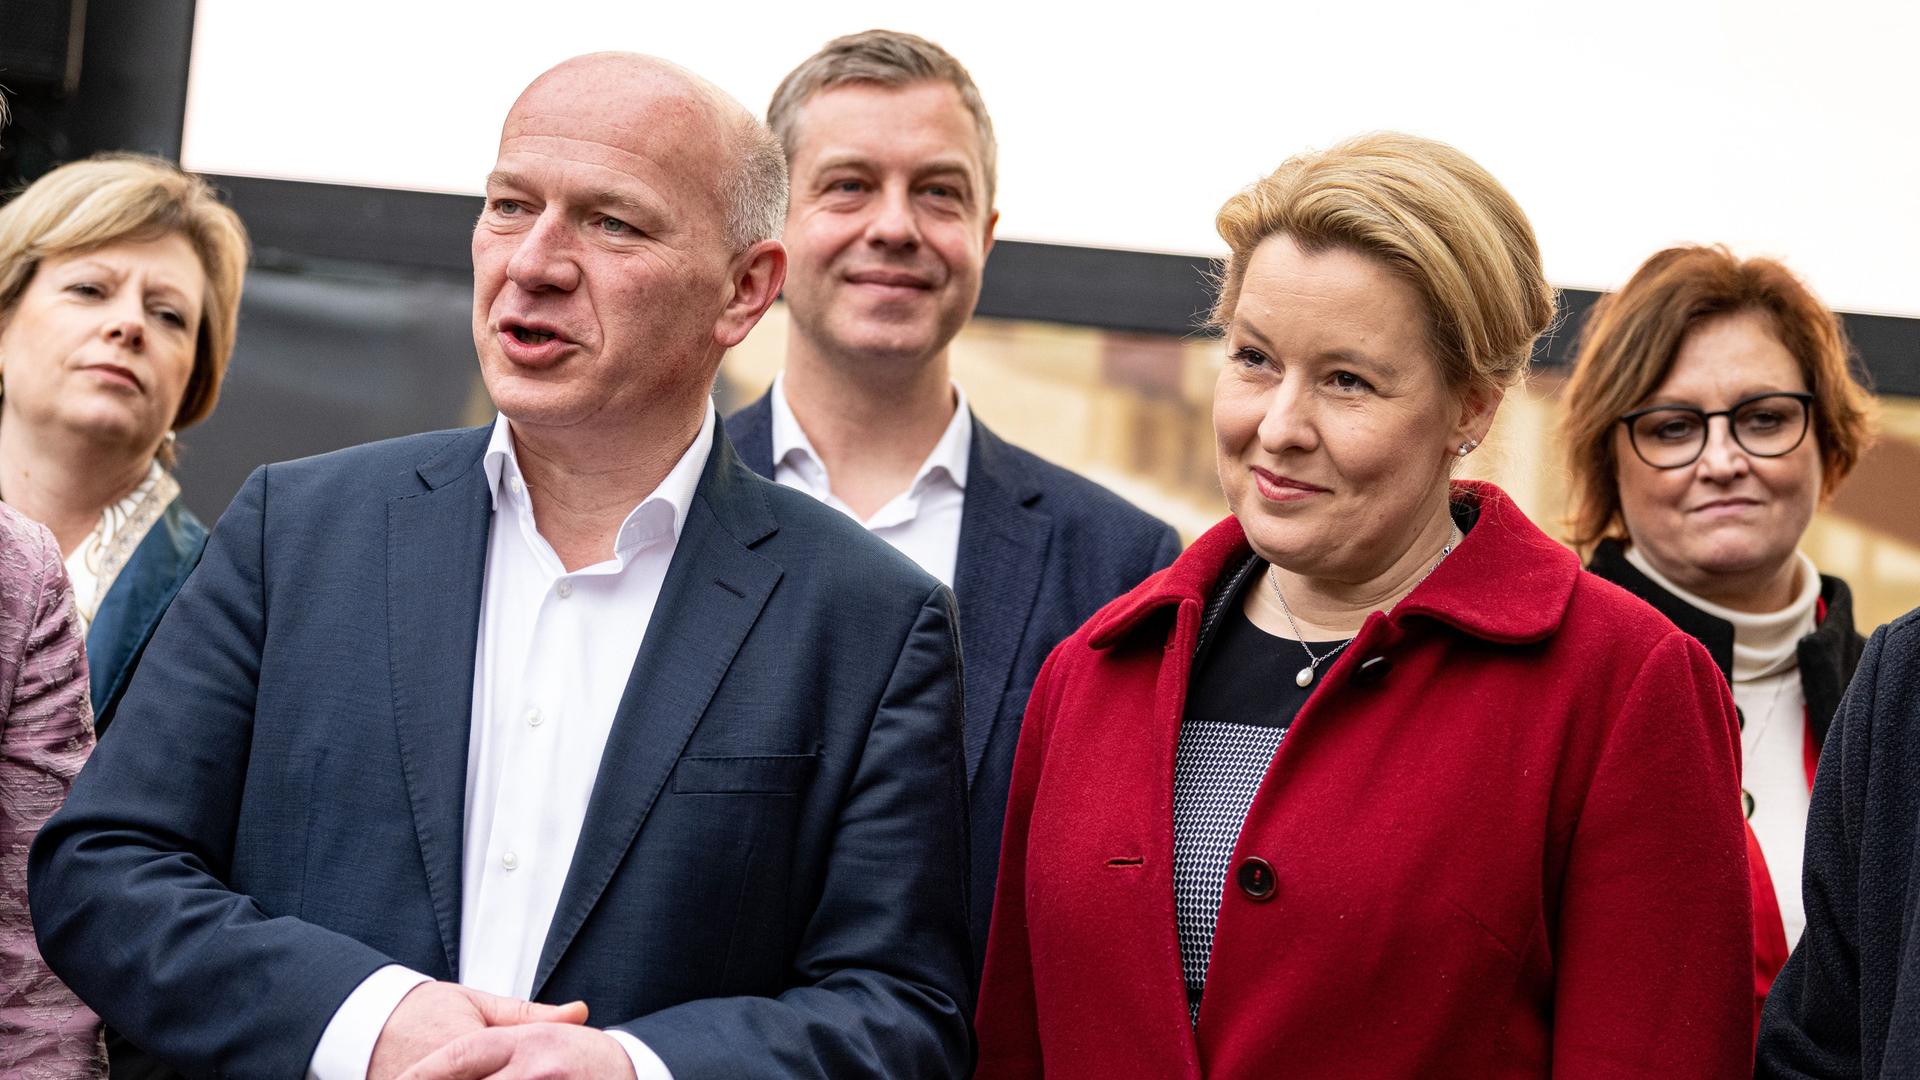 Koalitionsverhandlungen in Berlin - Giffey (SPD) strebt offenbar Schwarz-Rot an - CDU will morgen entscheiden